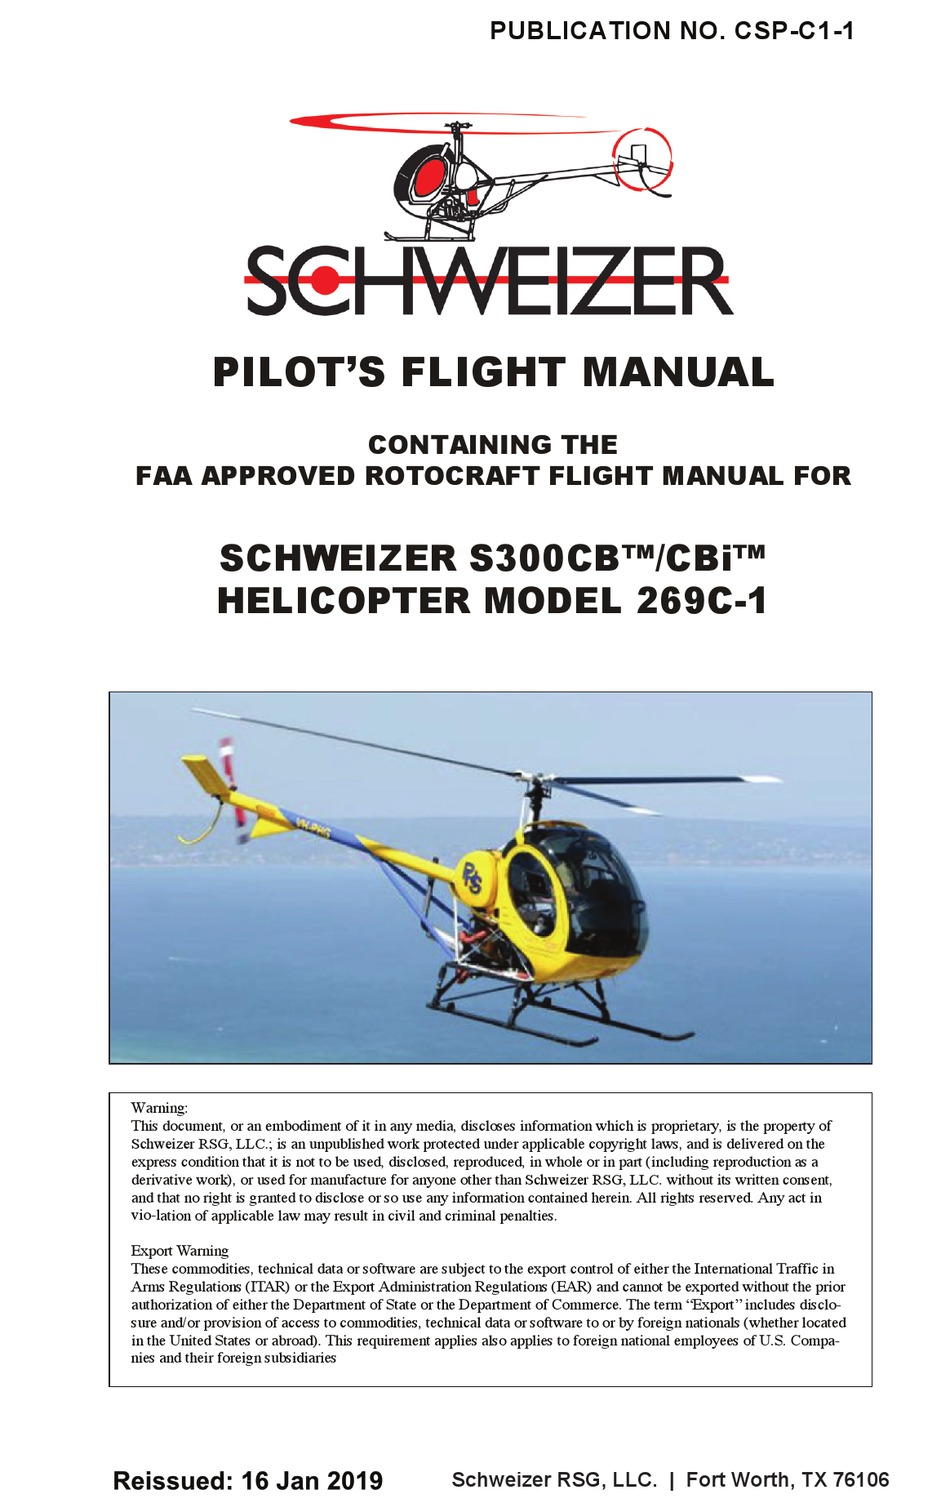 Schweizer 300 maintenance manual pdf